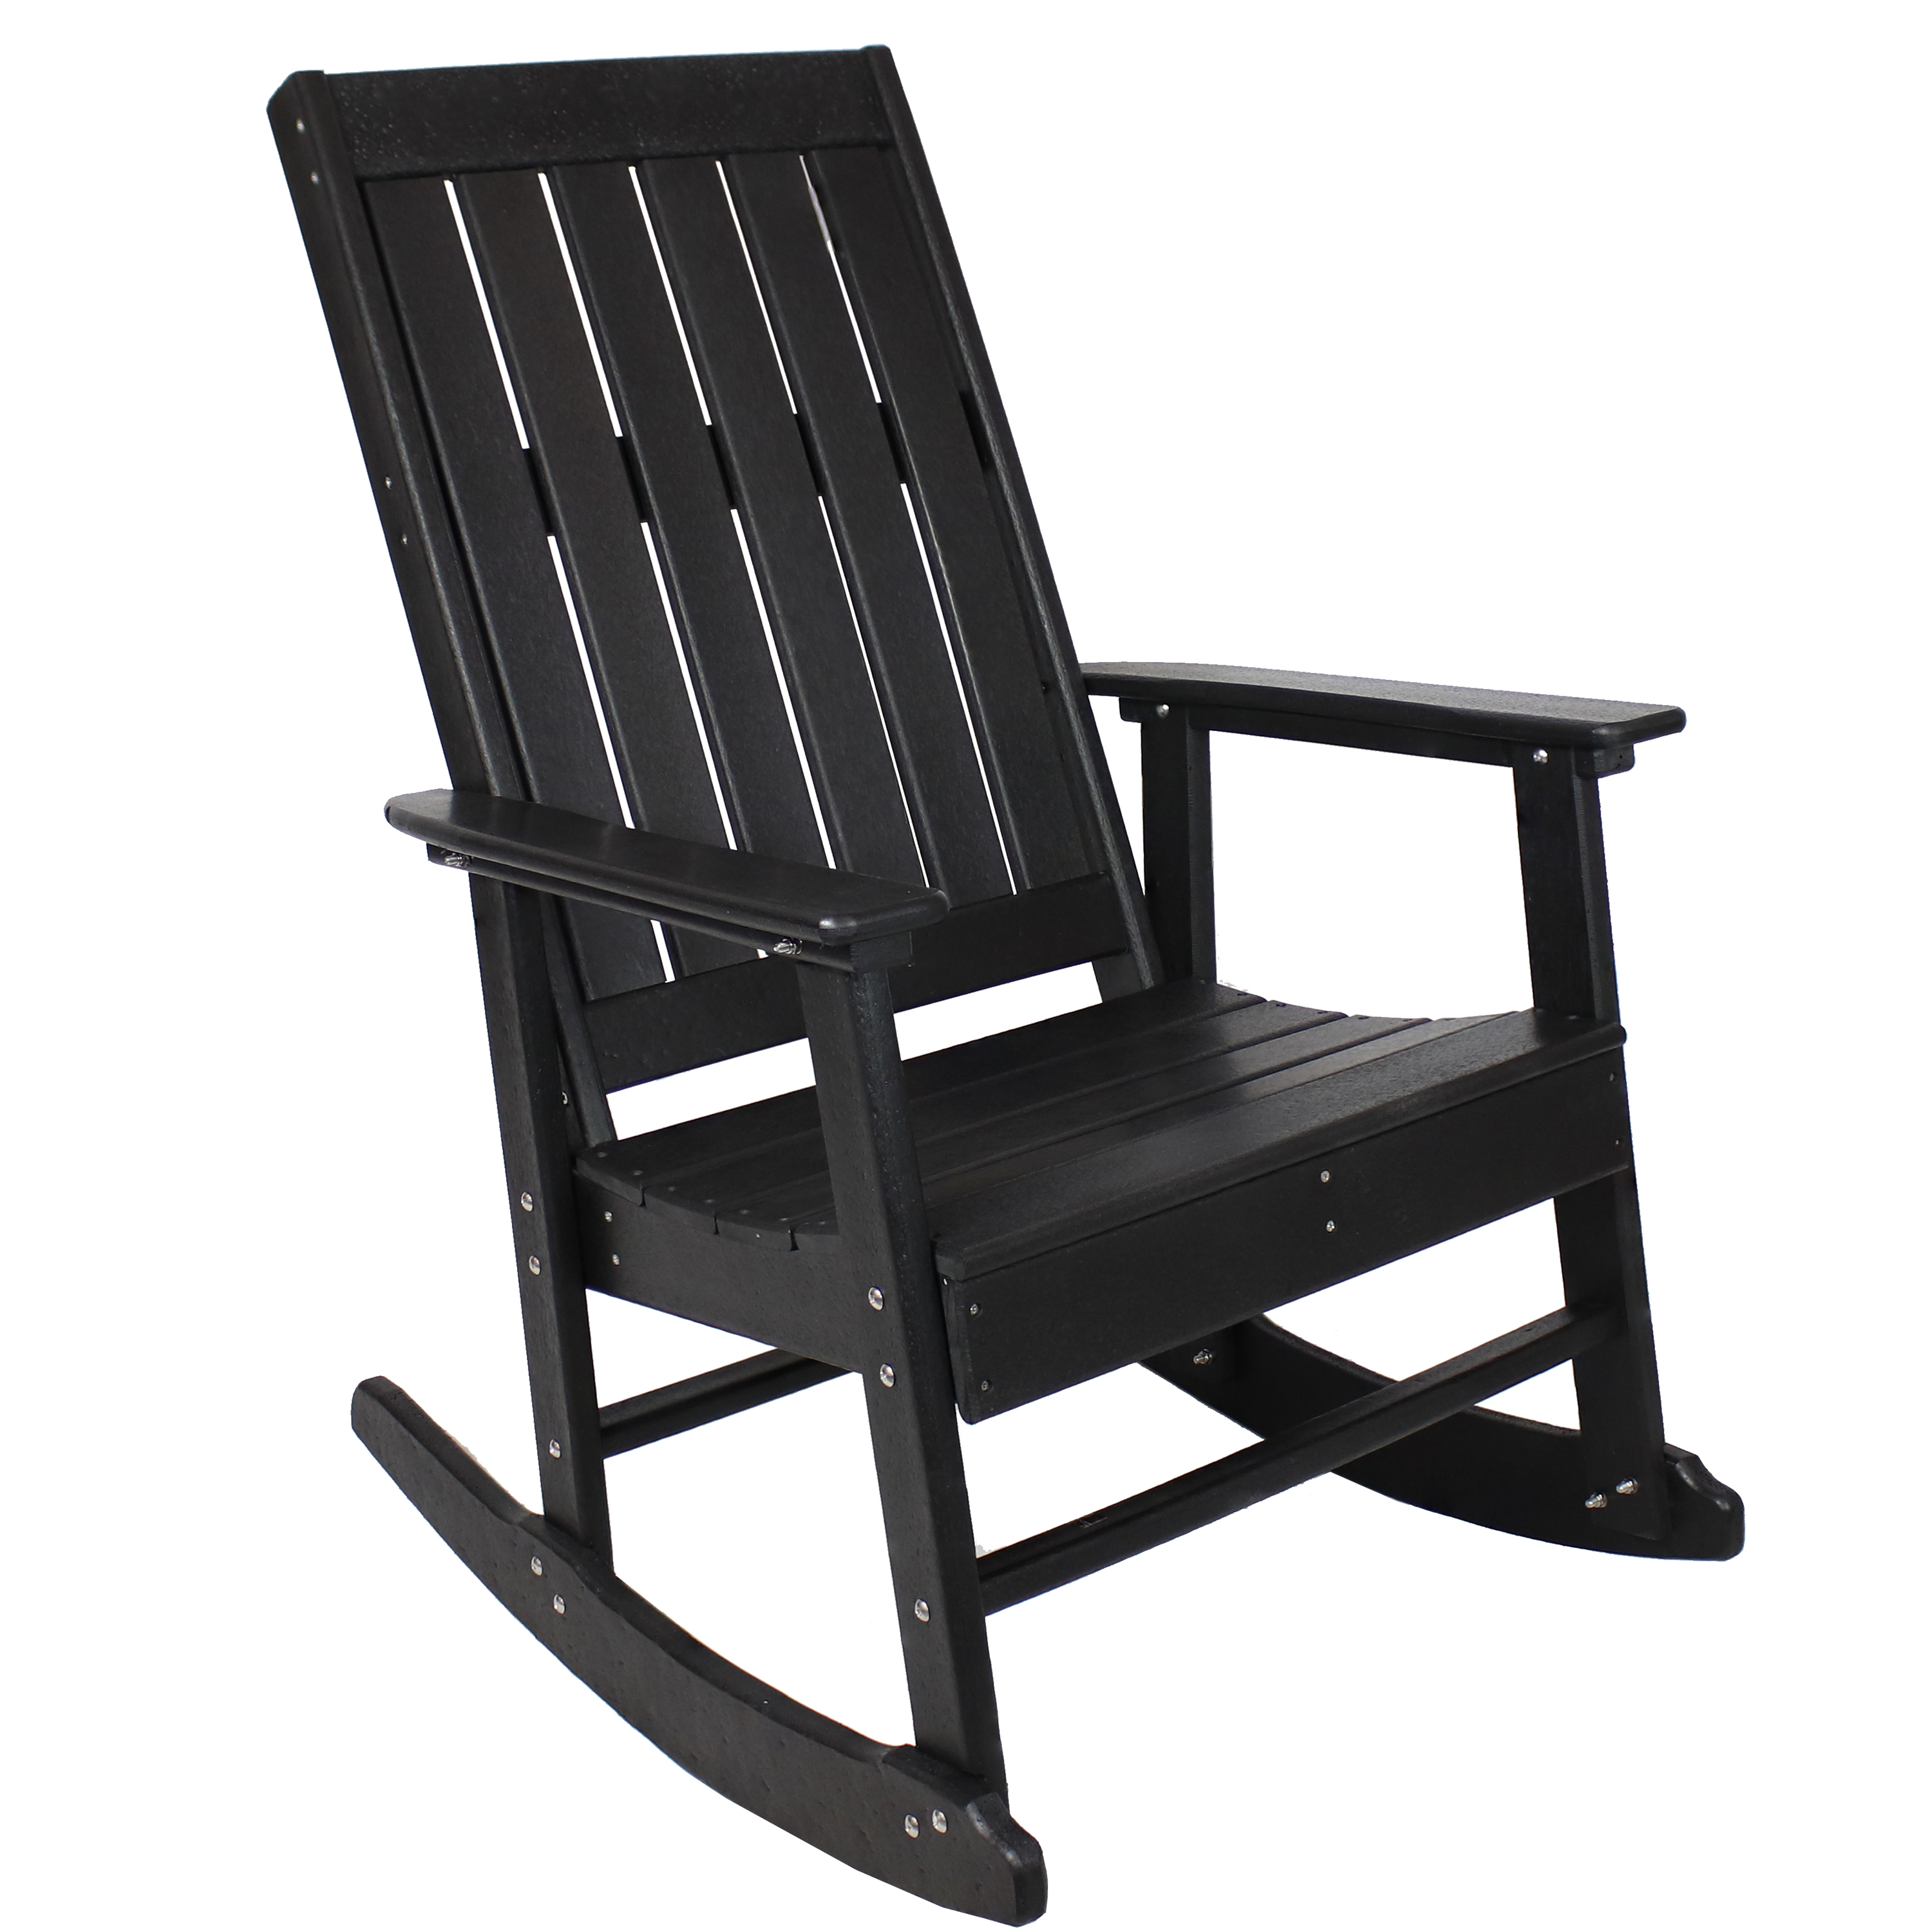 Sunnydaze Rustic Comfort Outdoor Rocking Chair - 300 lb Capacity - Black